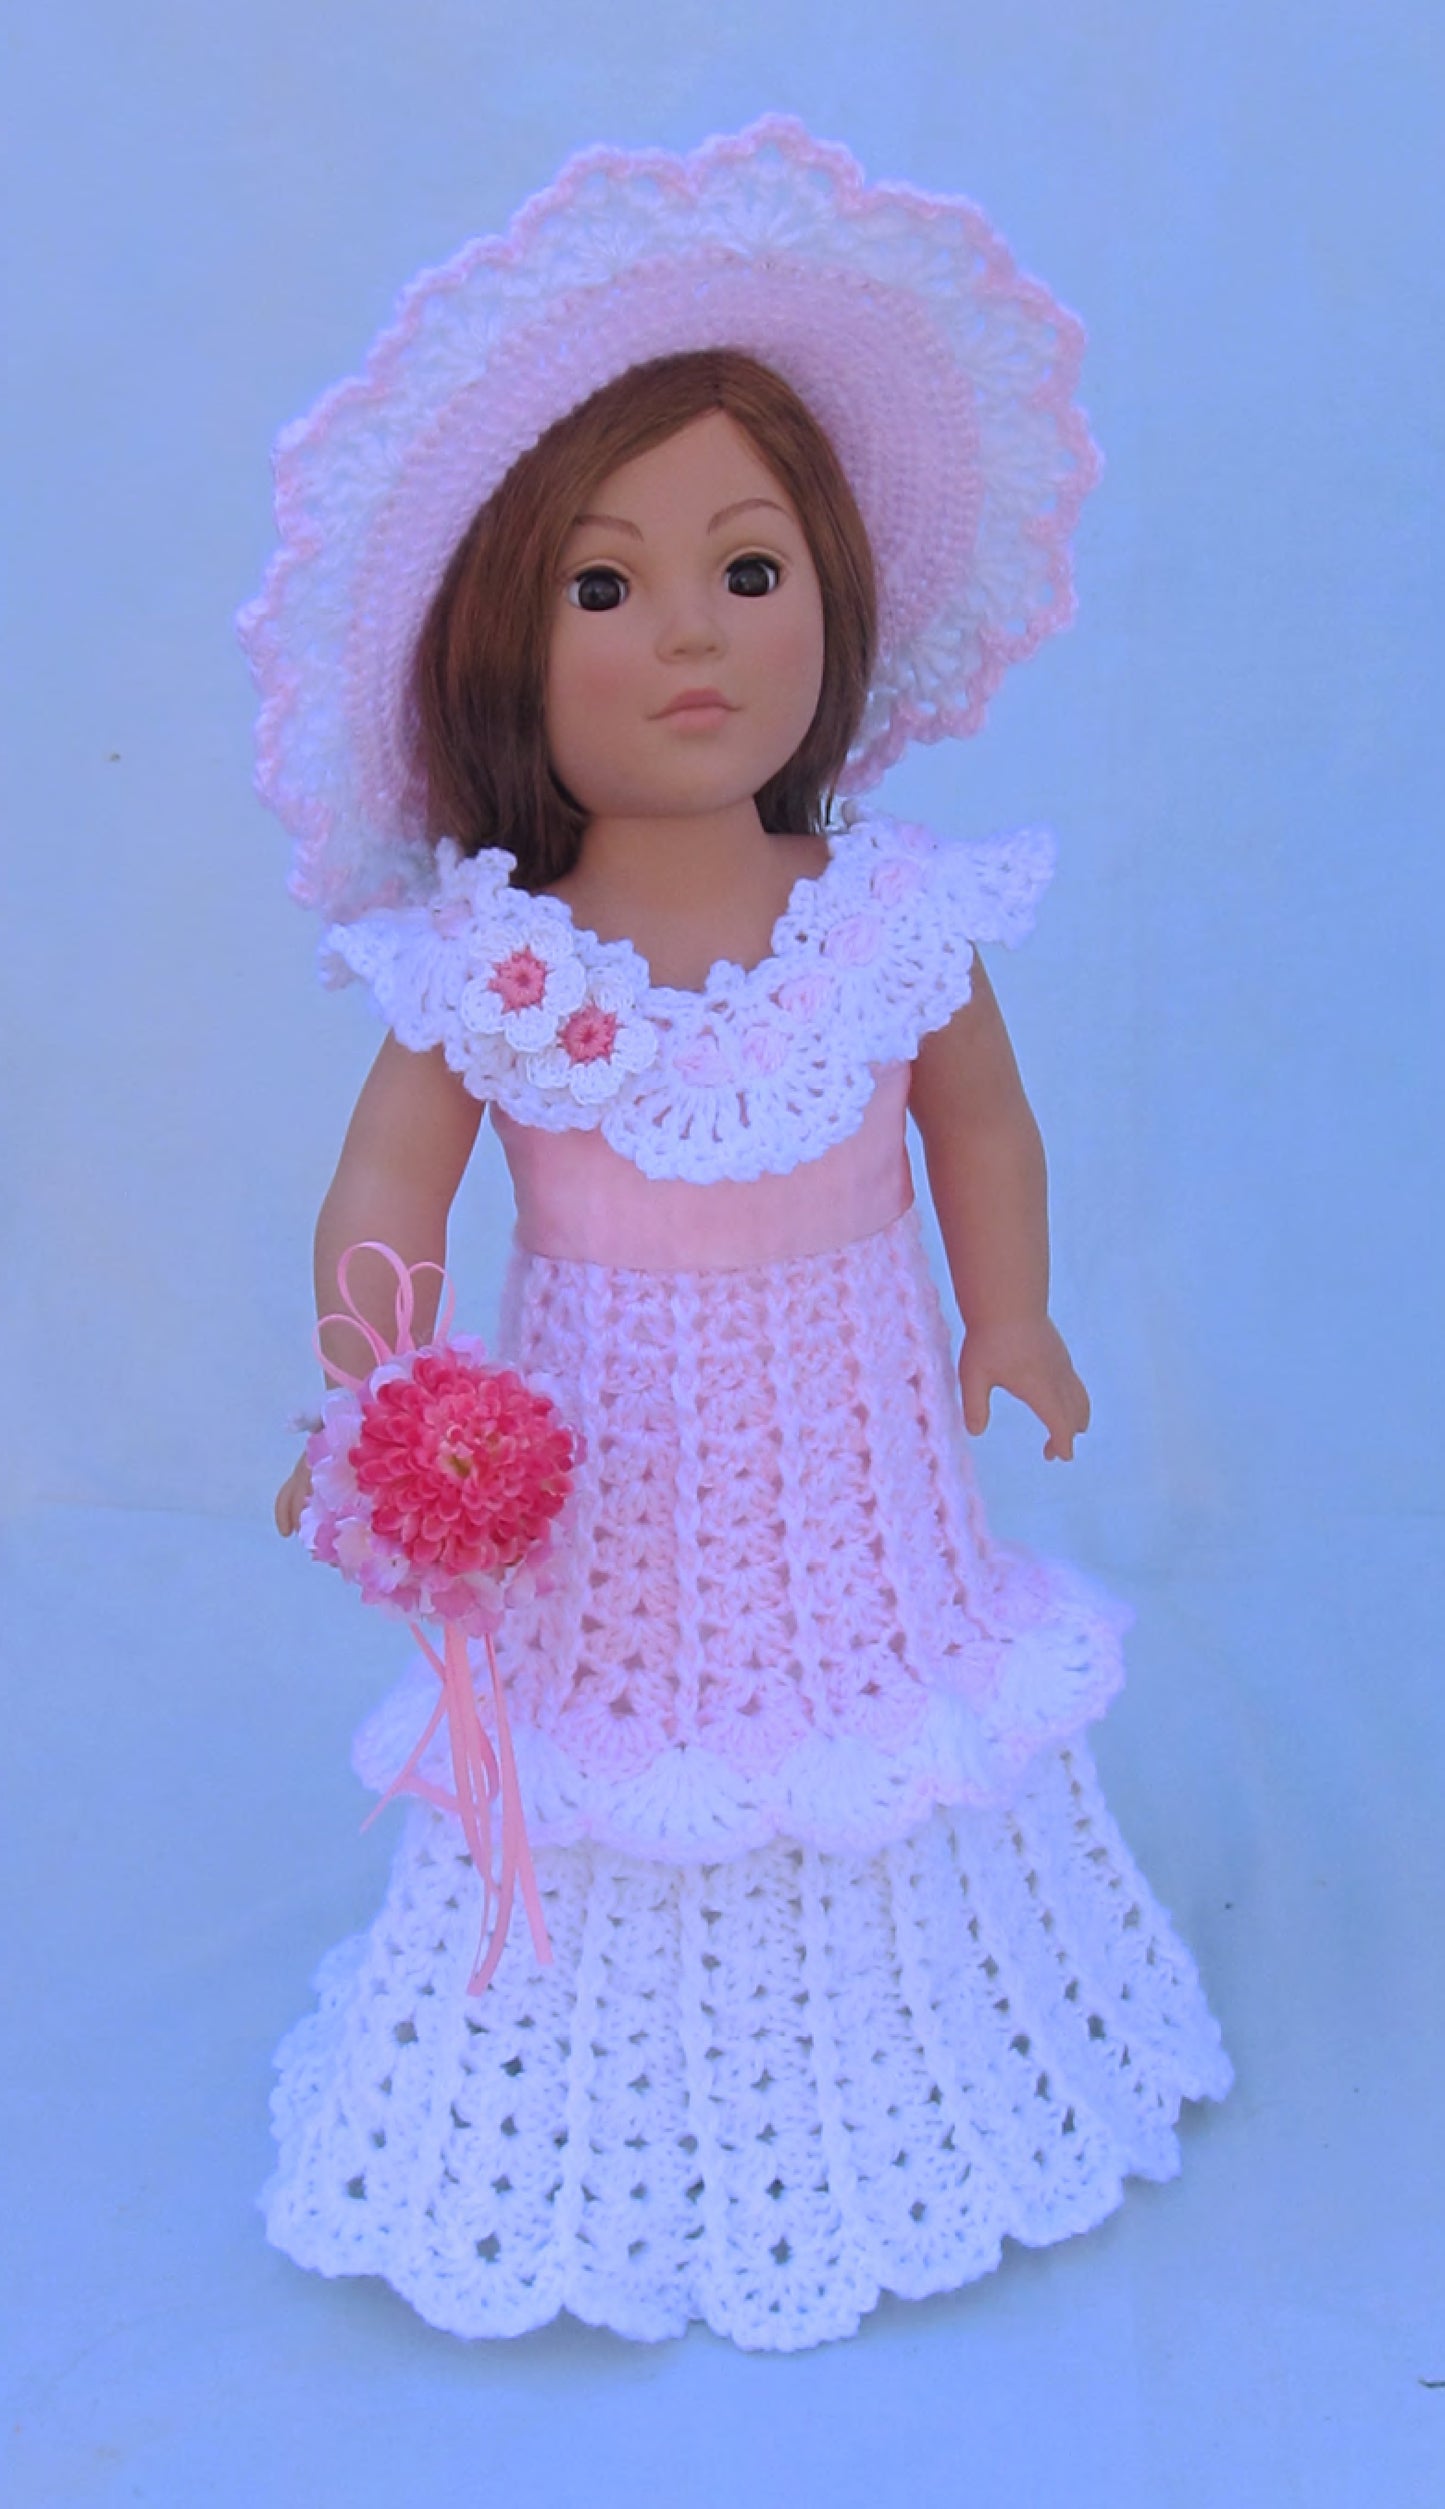 18 inch Doll Crochet Pattern, American Girl Doll Crochet Pattern, Bridal Party PDF - Annie Potter's Yarn Basket